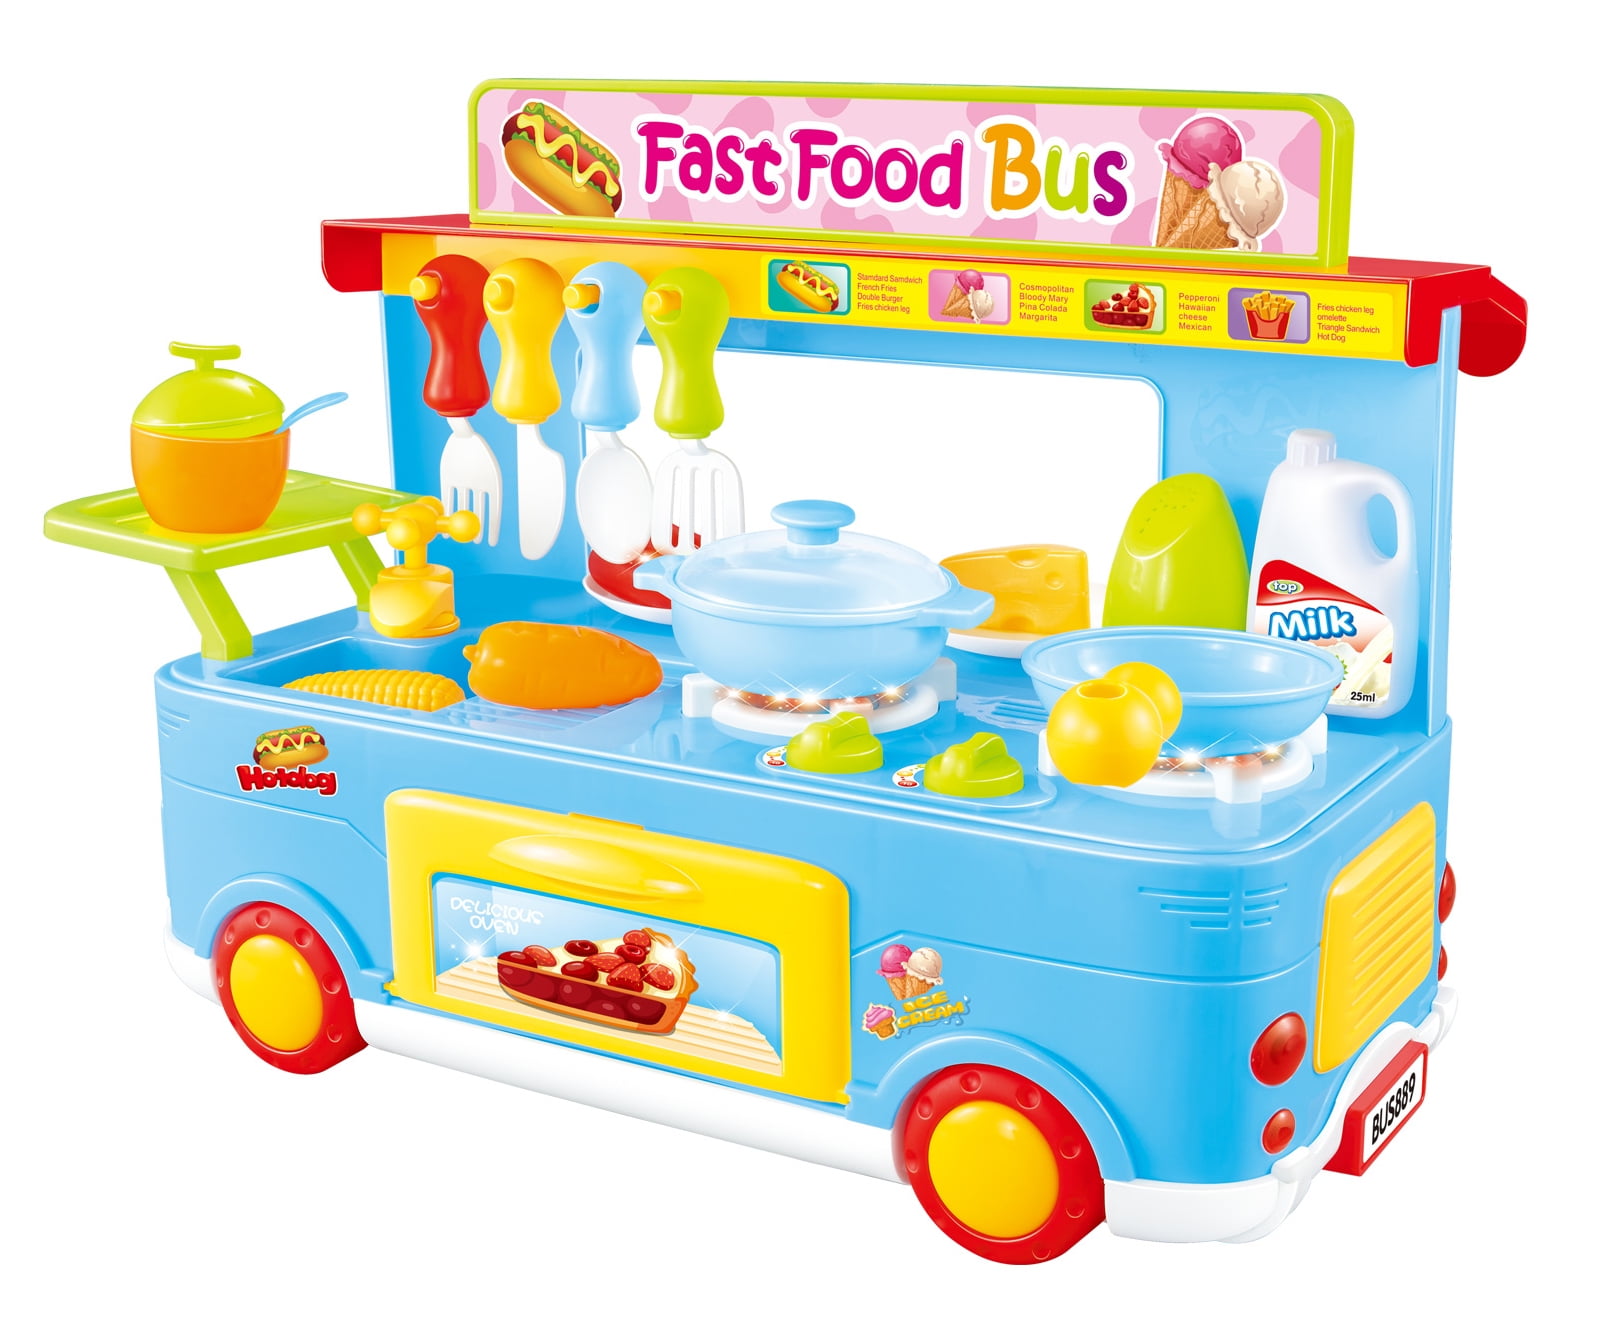 Fast Food Bus Kitchen Play Set Toy 29pcs (Blue) PS8807 - Walmart.com